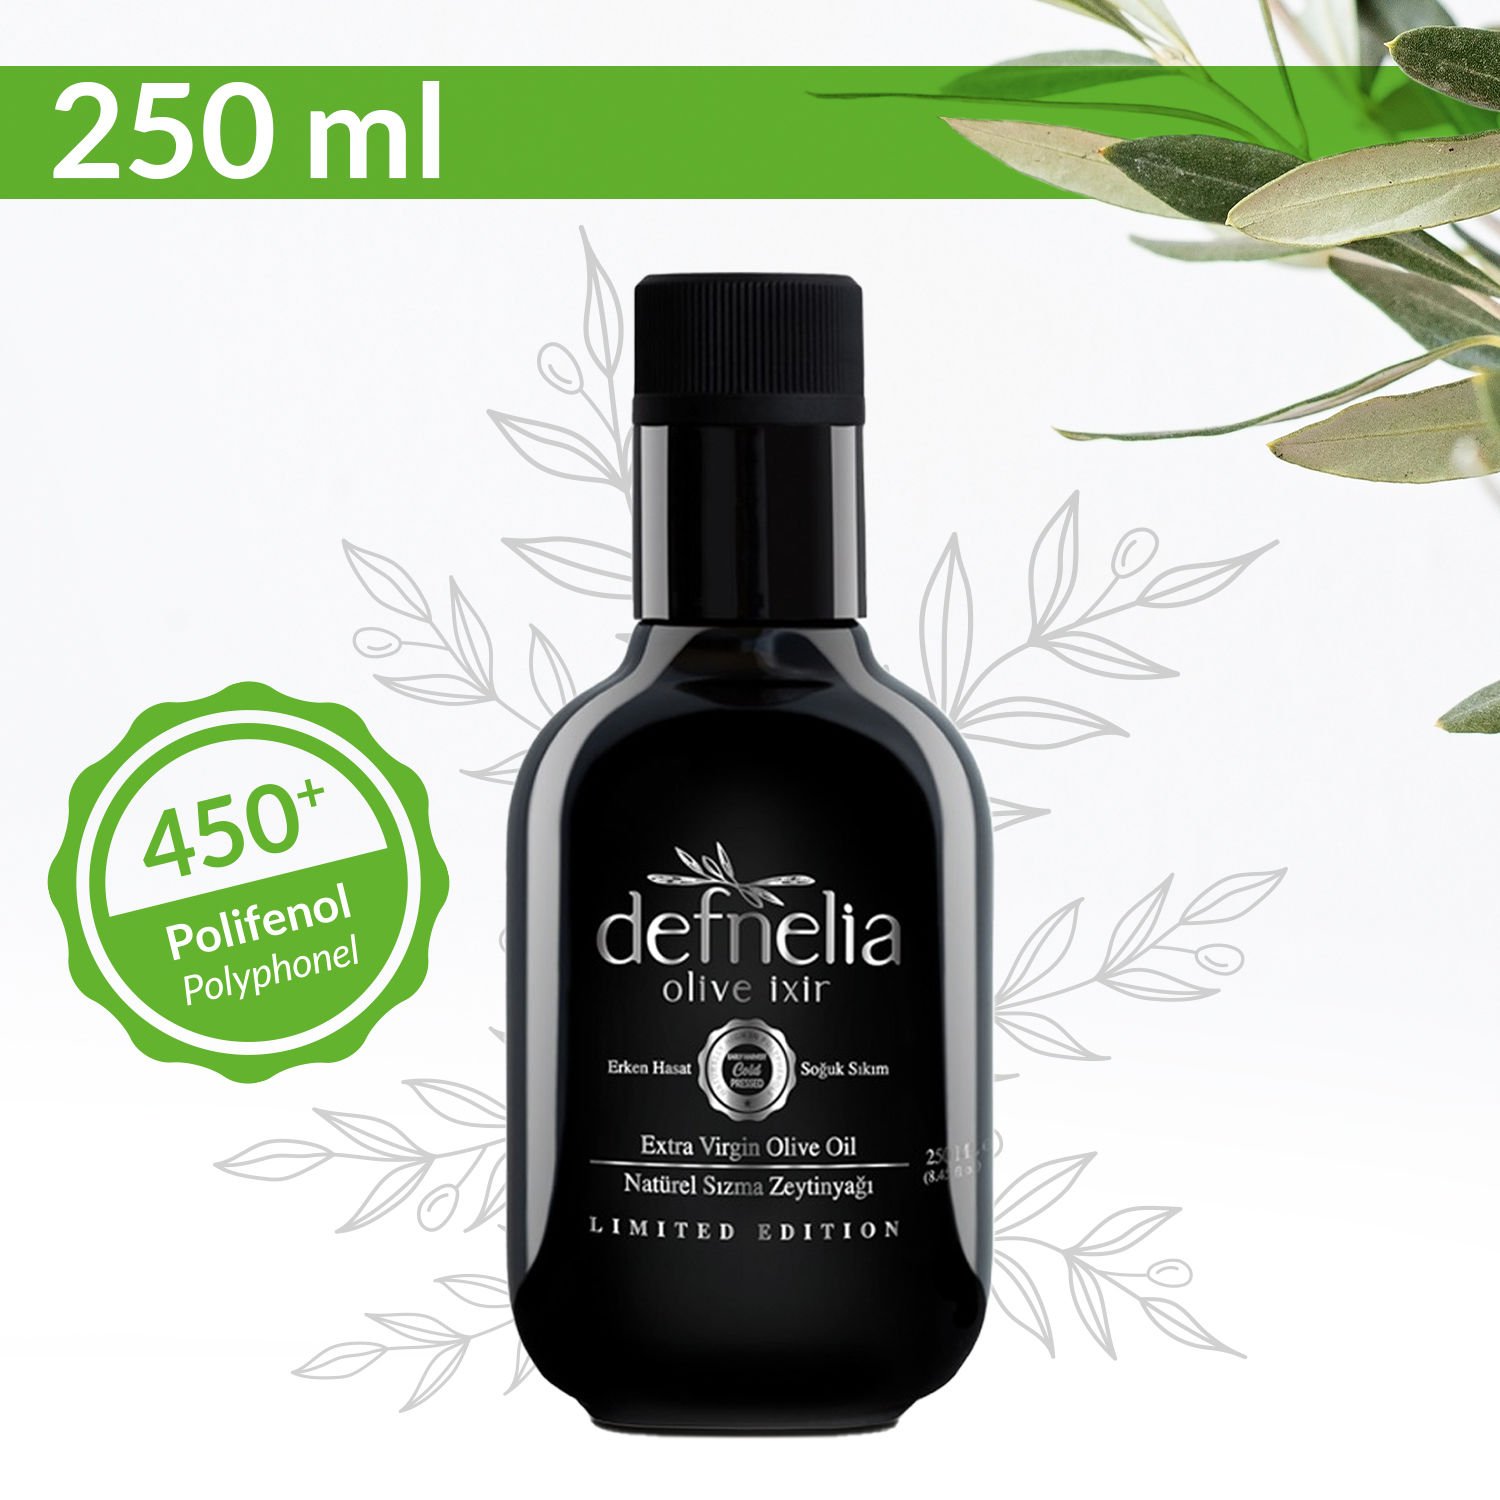 Defnelia 450+ Polifenollü Natürel Sızma Zeytinyağı -250ml